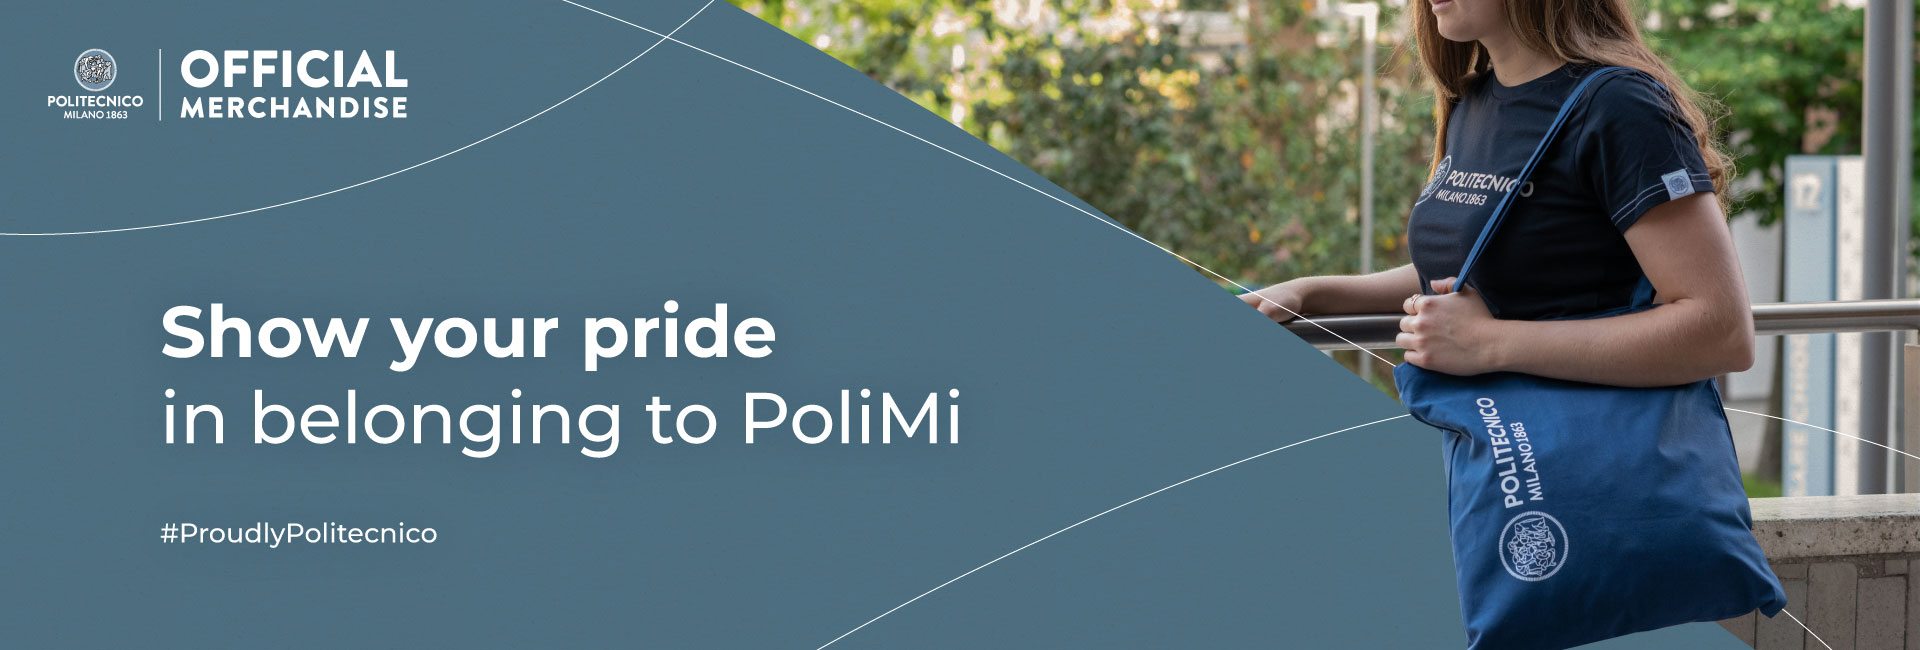 Show your pride in belonging to Polimi: #ProudlyPolitecnico